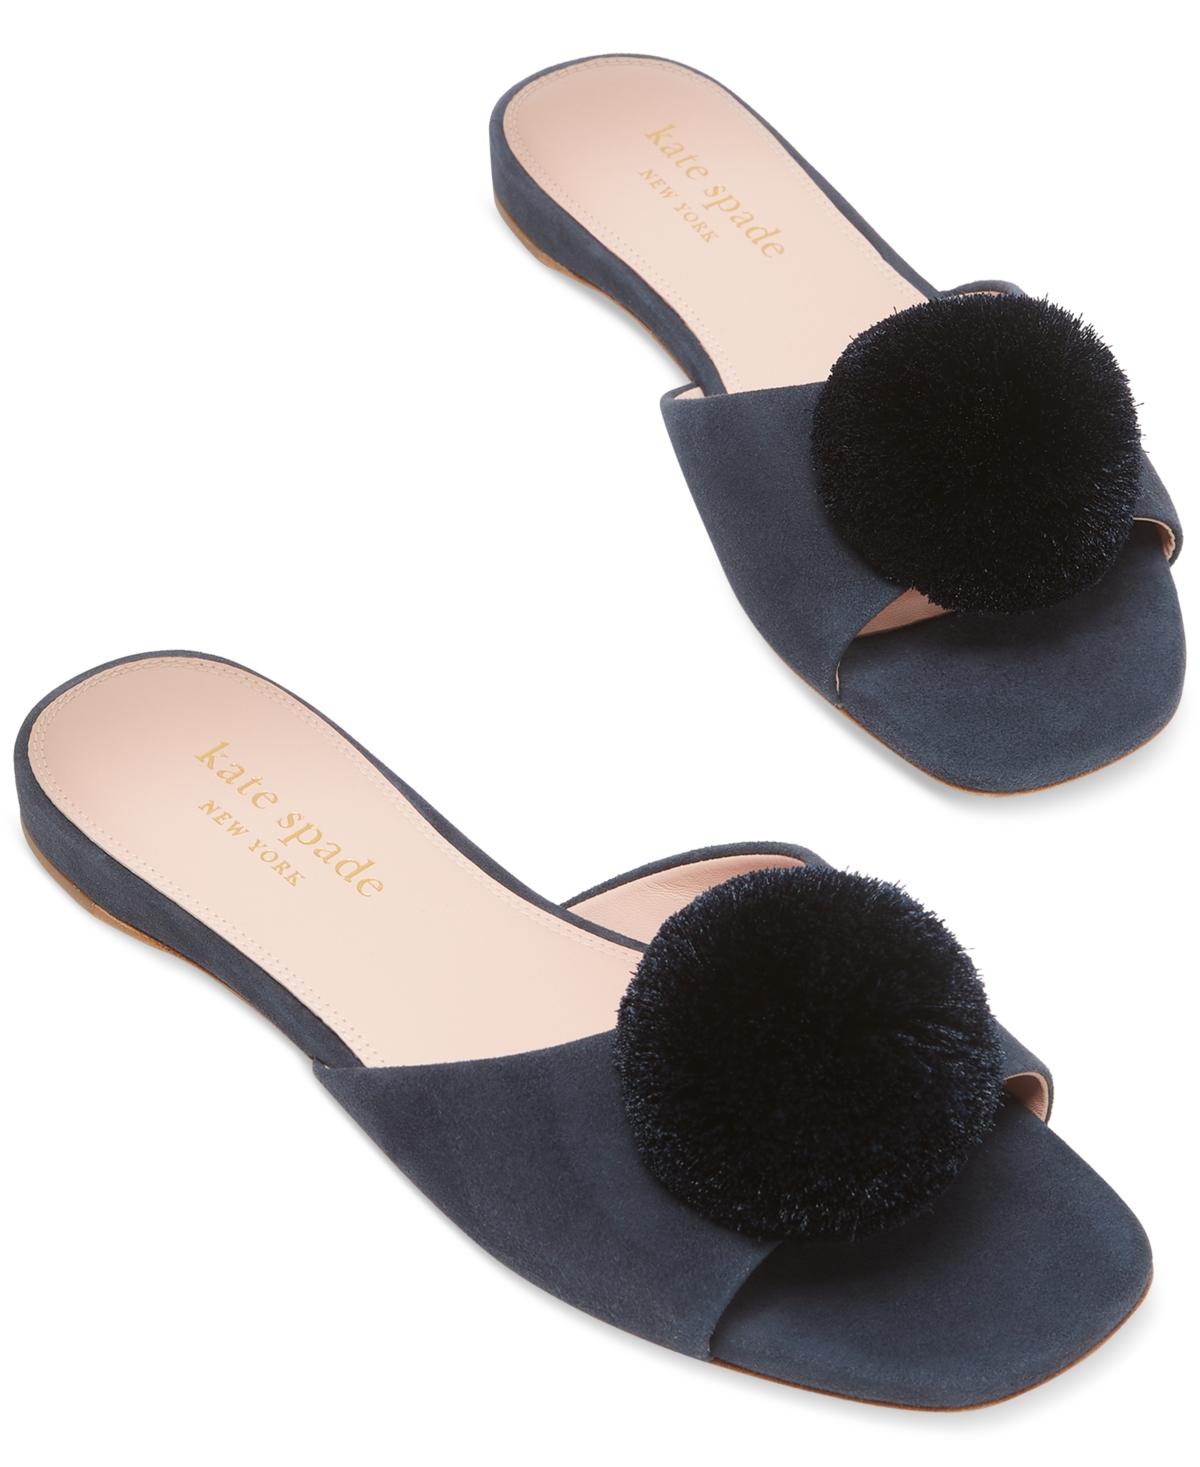 Kate Spade Amour Slip-on Pom Pom Slide Sandals in Black